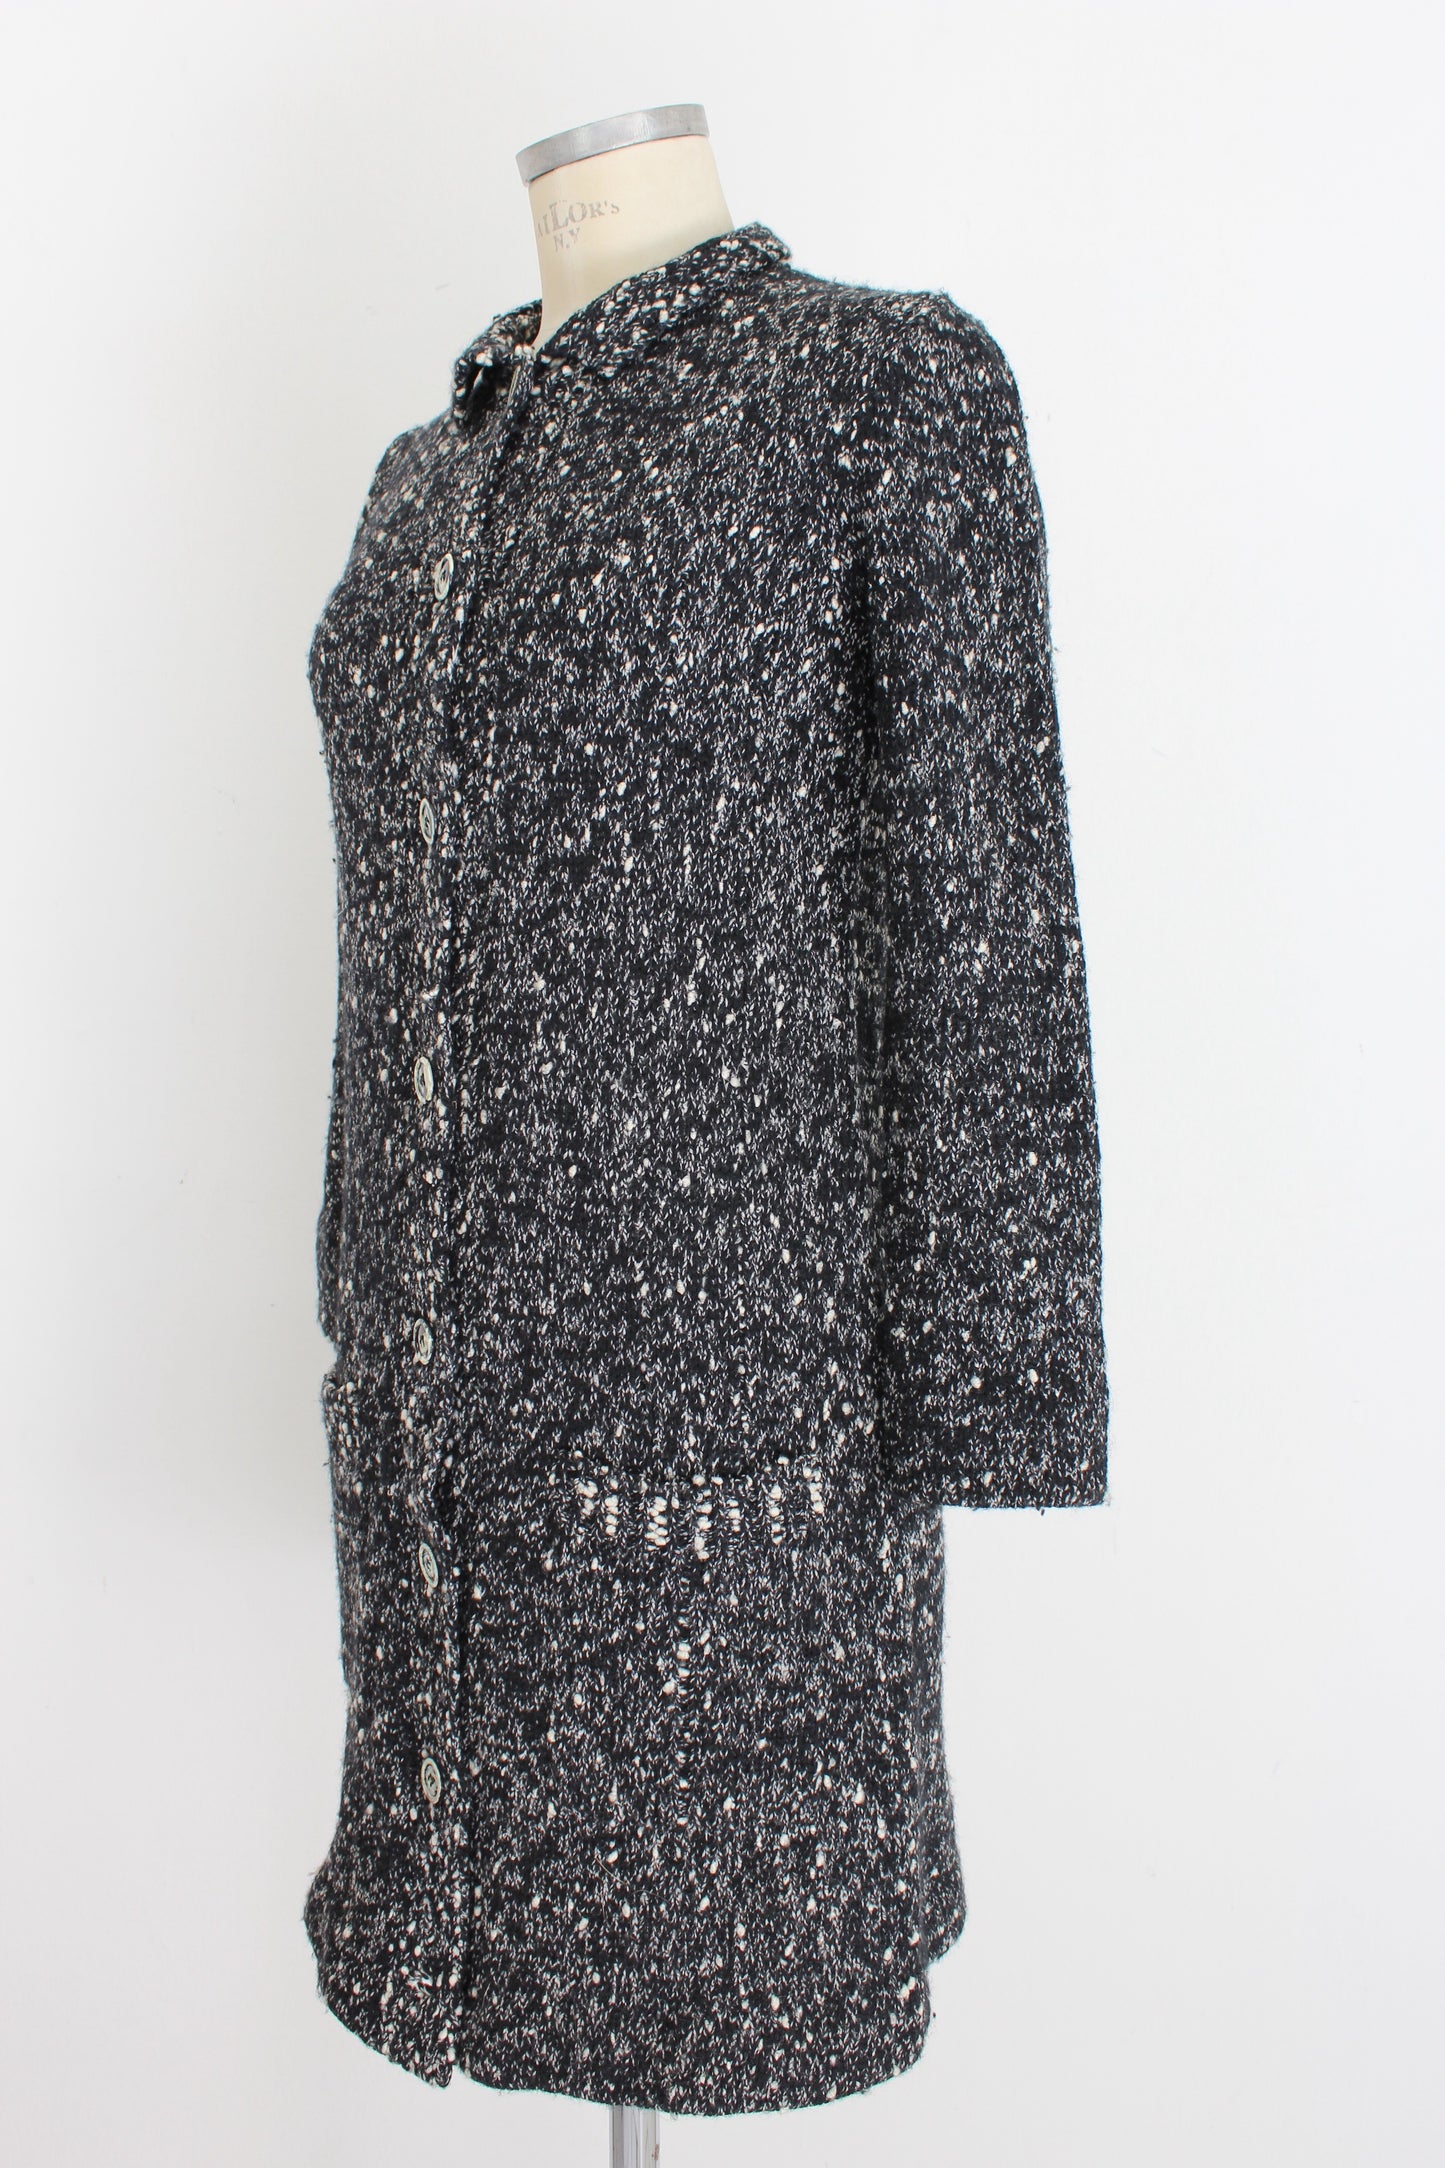 Krizia Vintage Black Wool Long Sweater